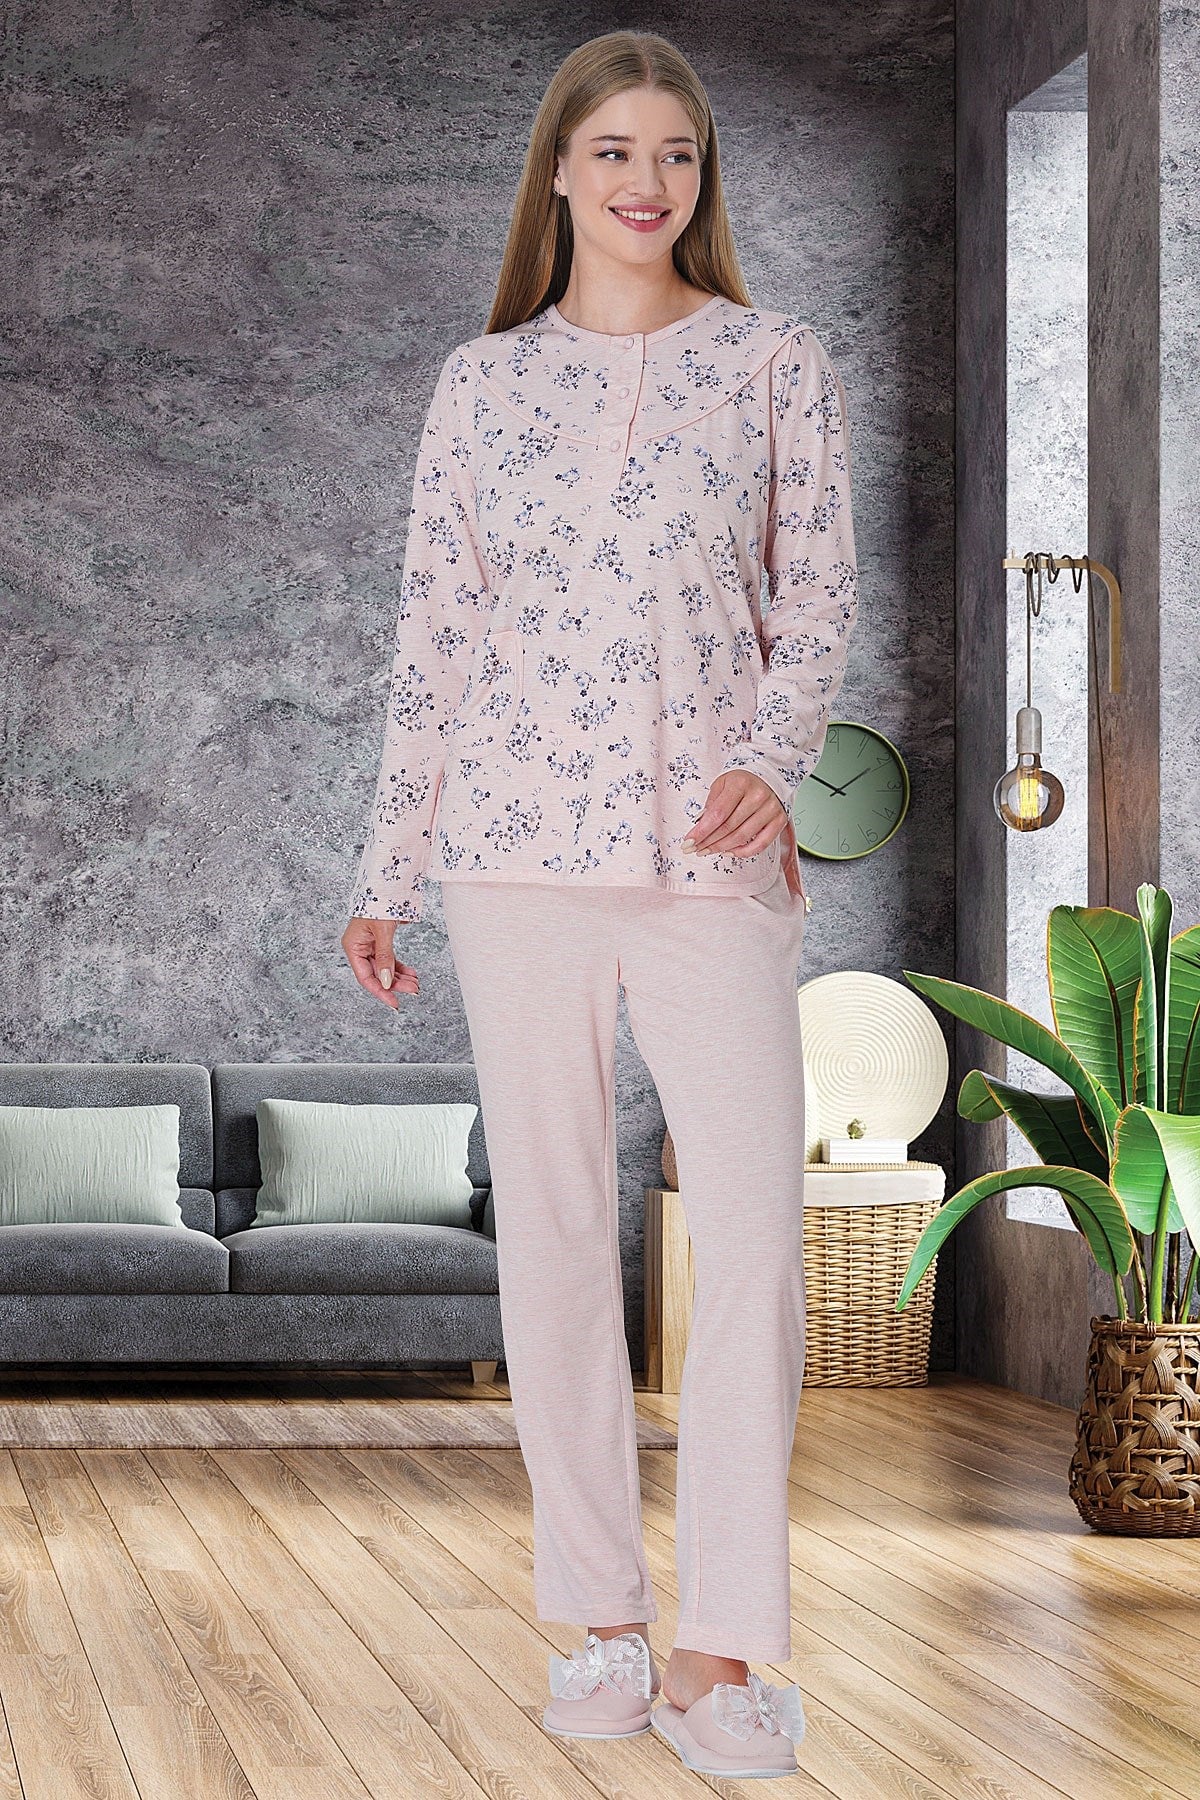 Shopymommy 5736 Flowery Plus Size Maternity & Nursing Pajamas Pink